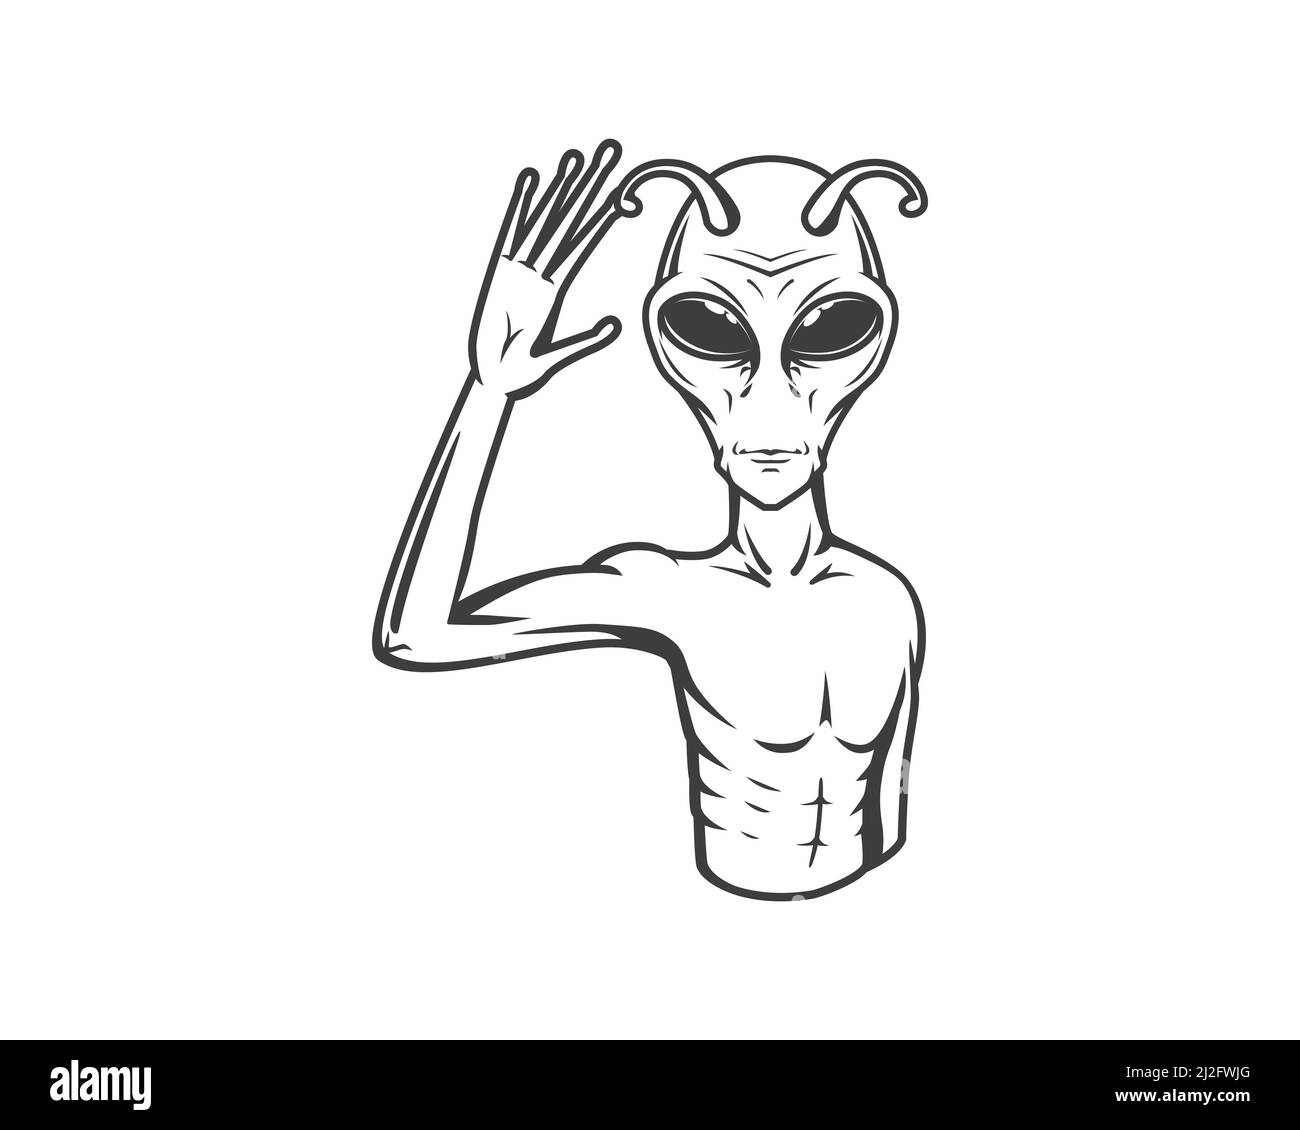 Design of cute alien waving hand on the planet 5054343 Vector Art